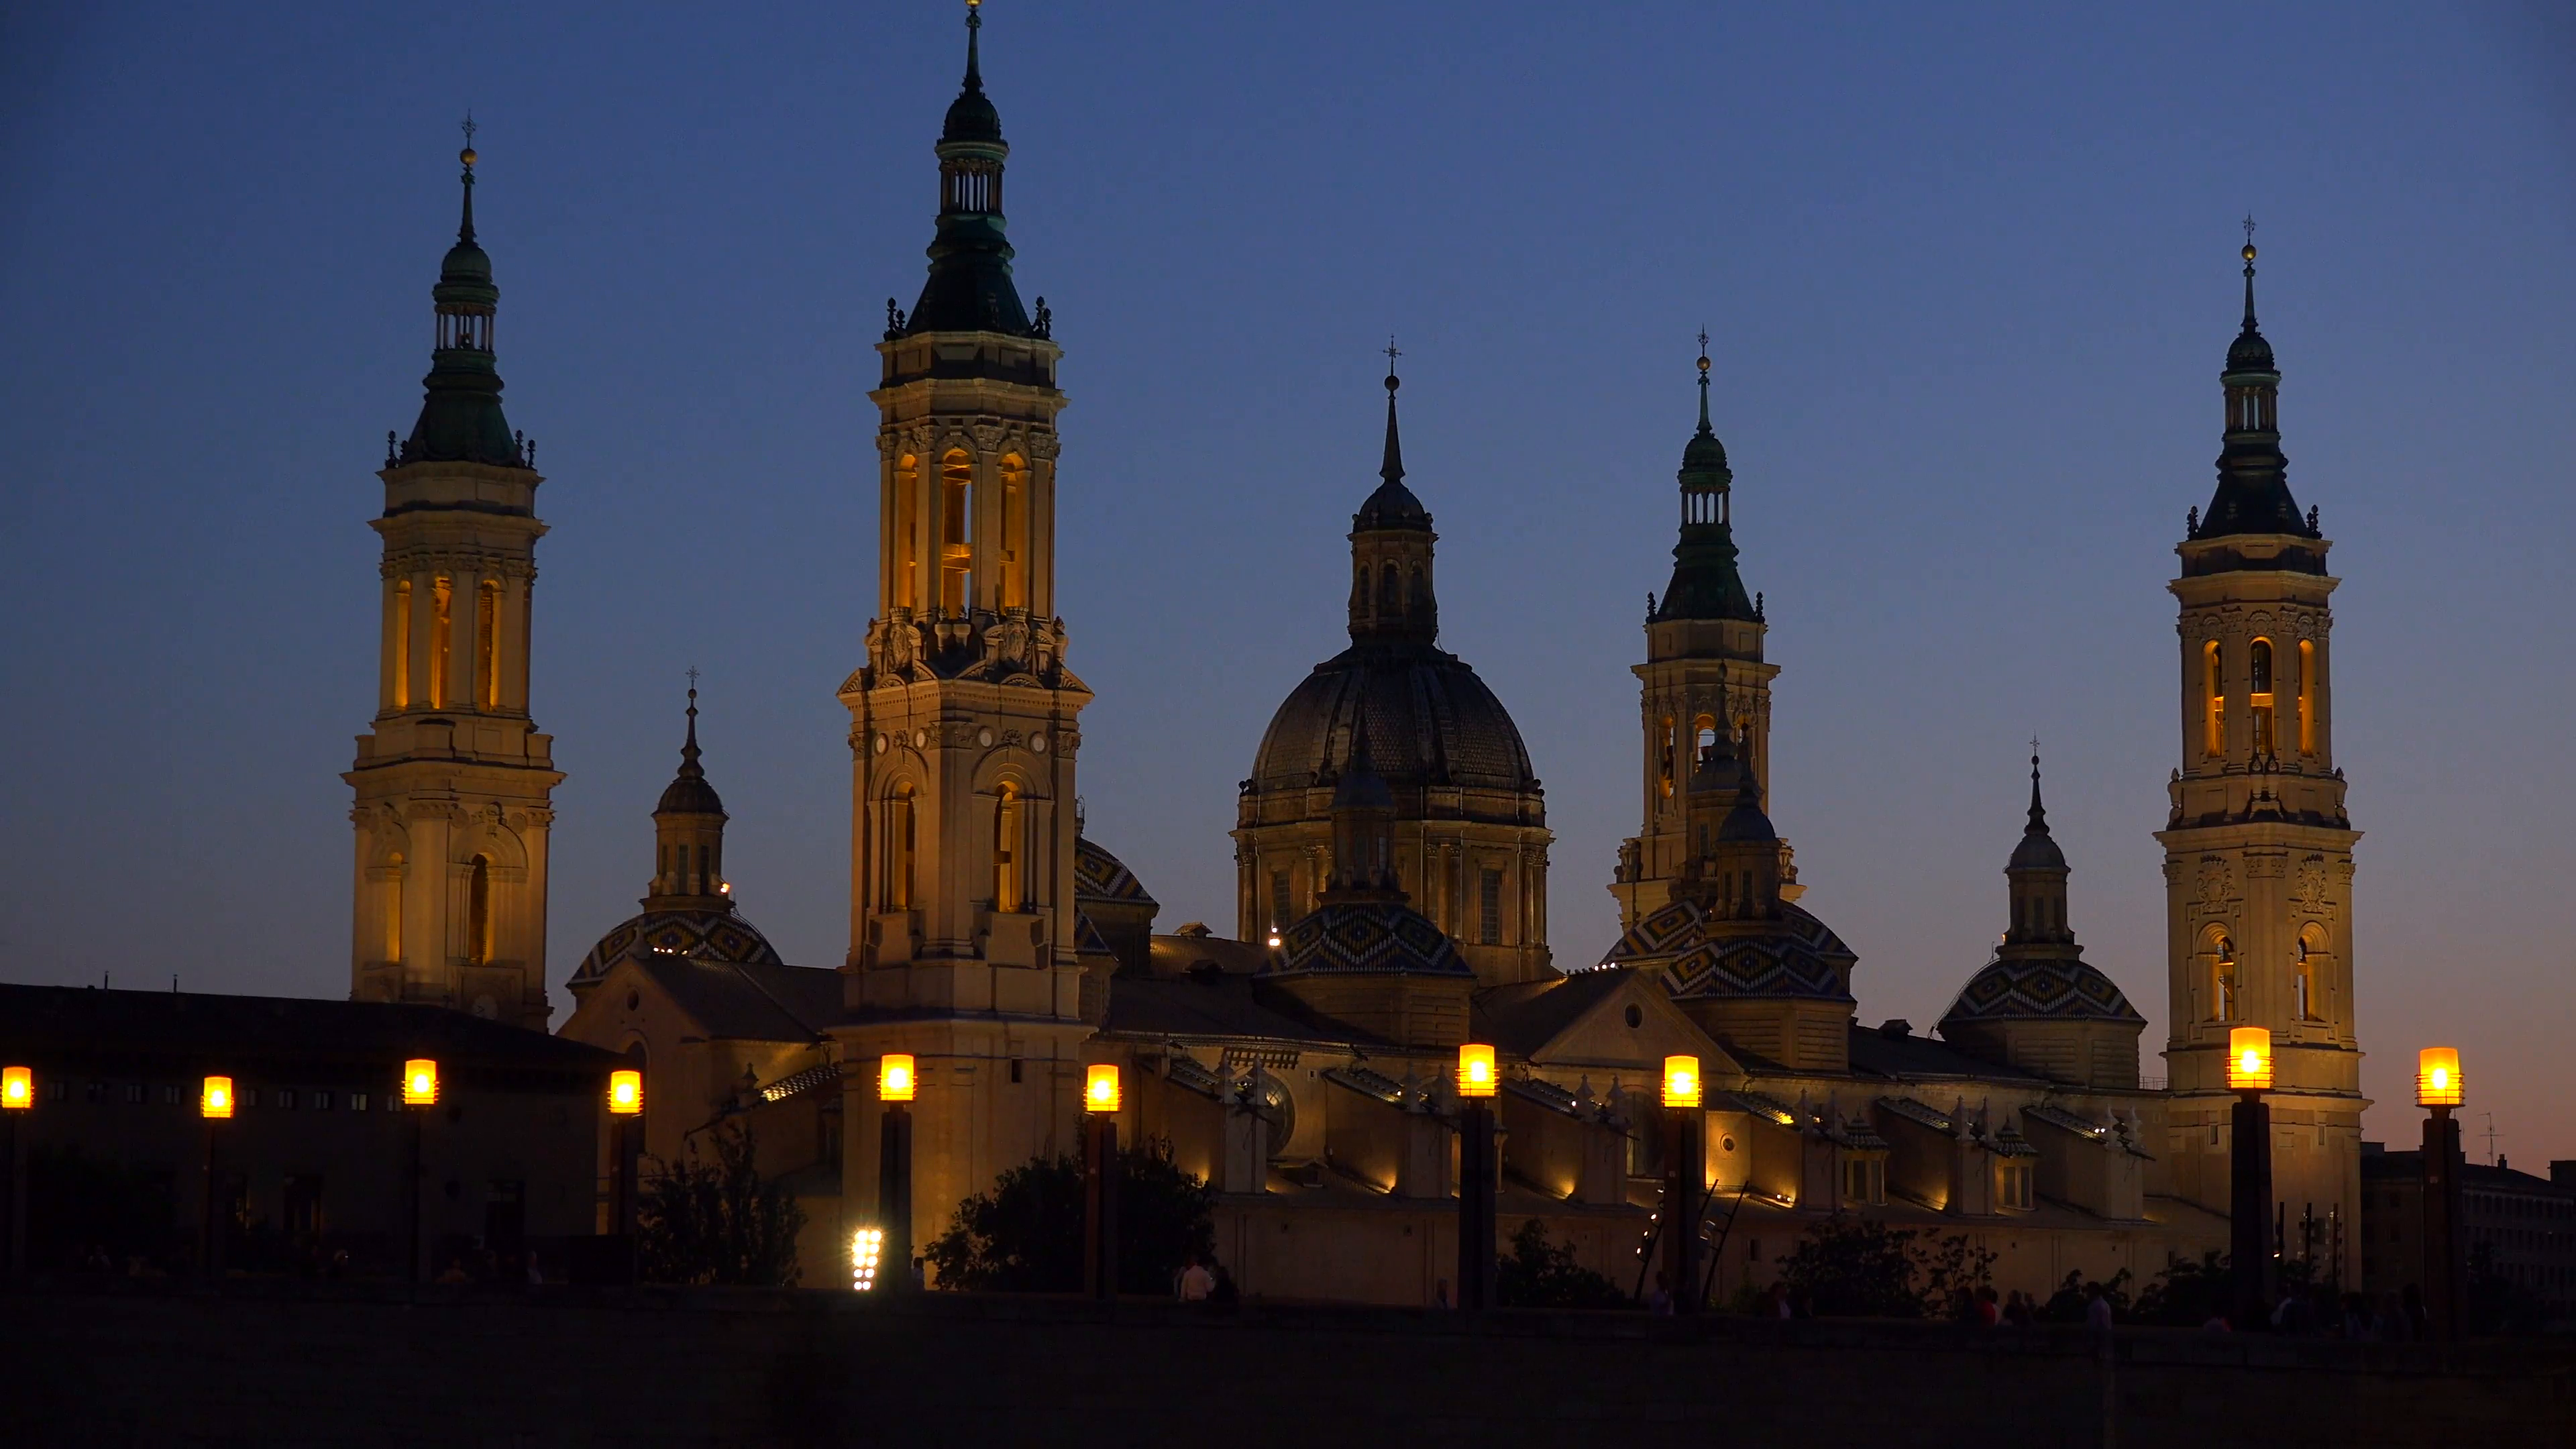 The classic and beautiful Catholic church at Zaragoza Spain at dusk ...